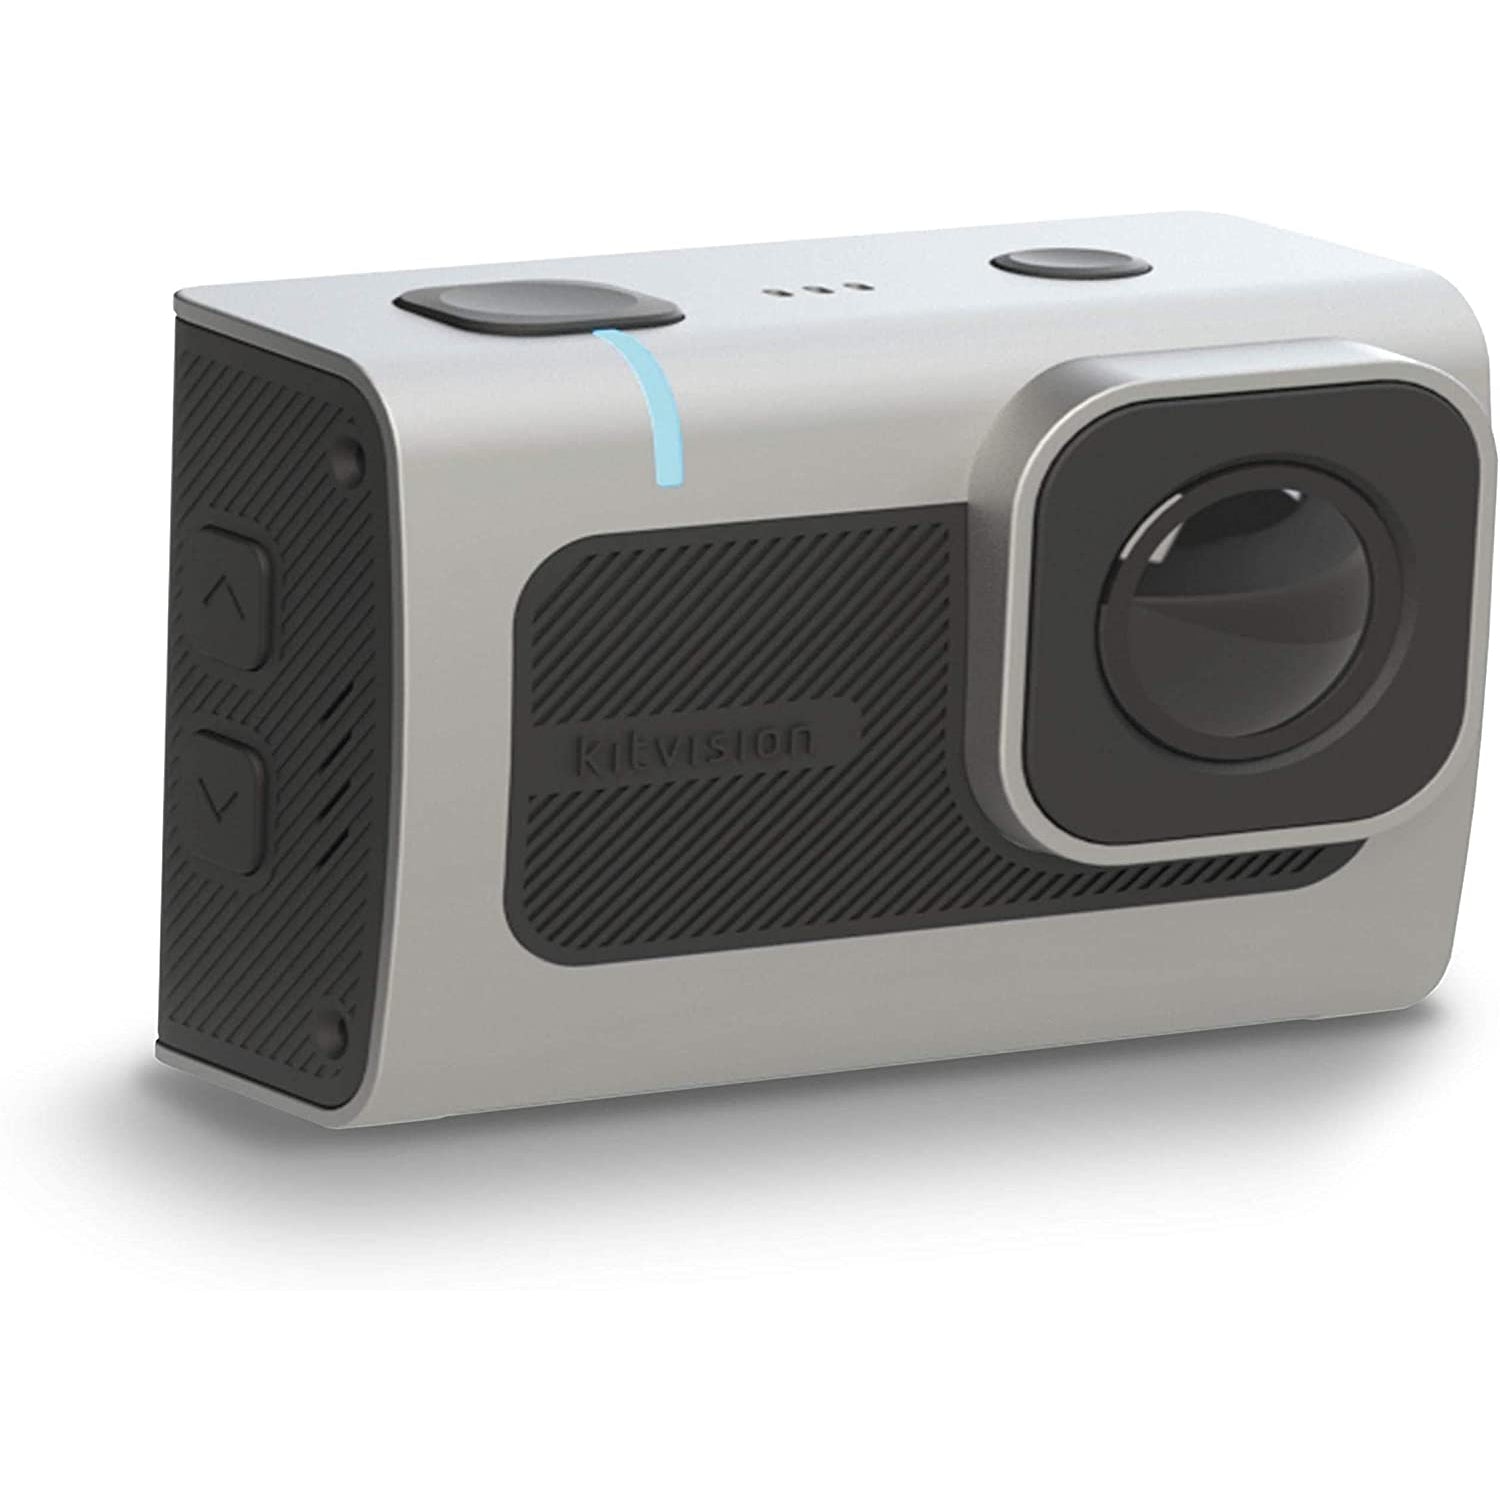 Kitvision Venture 720p Action Camera - Silver and Black